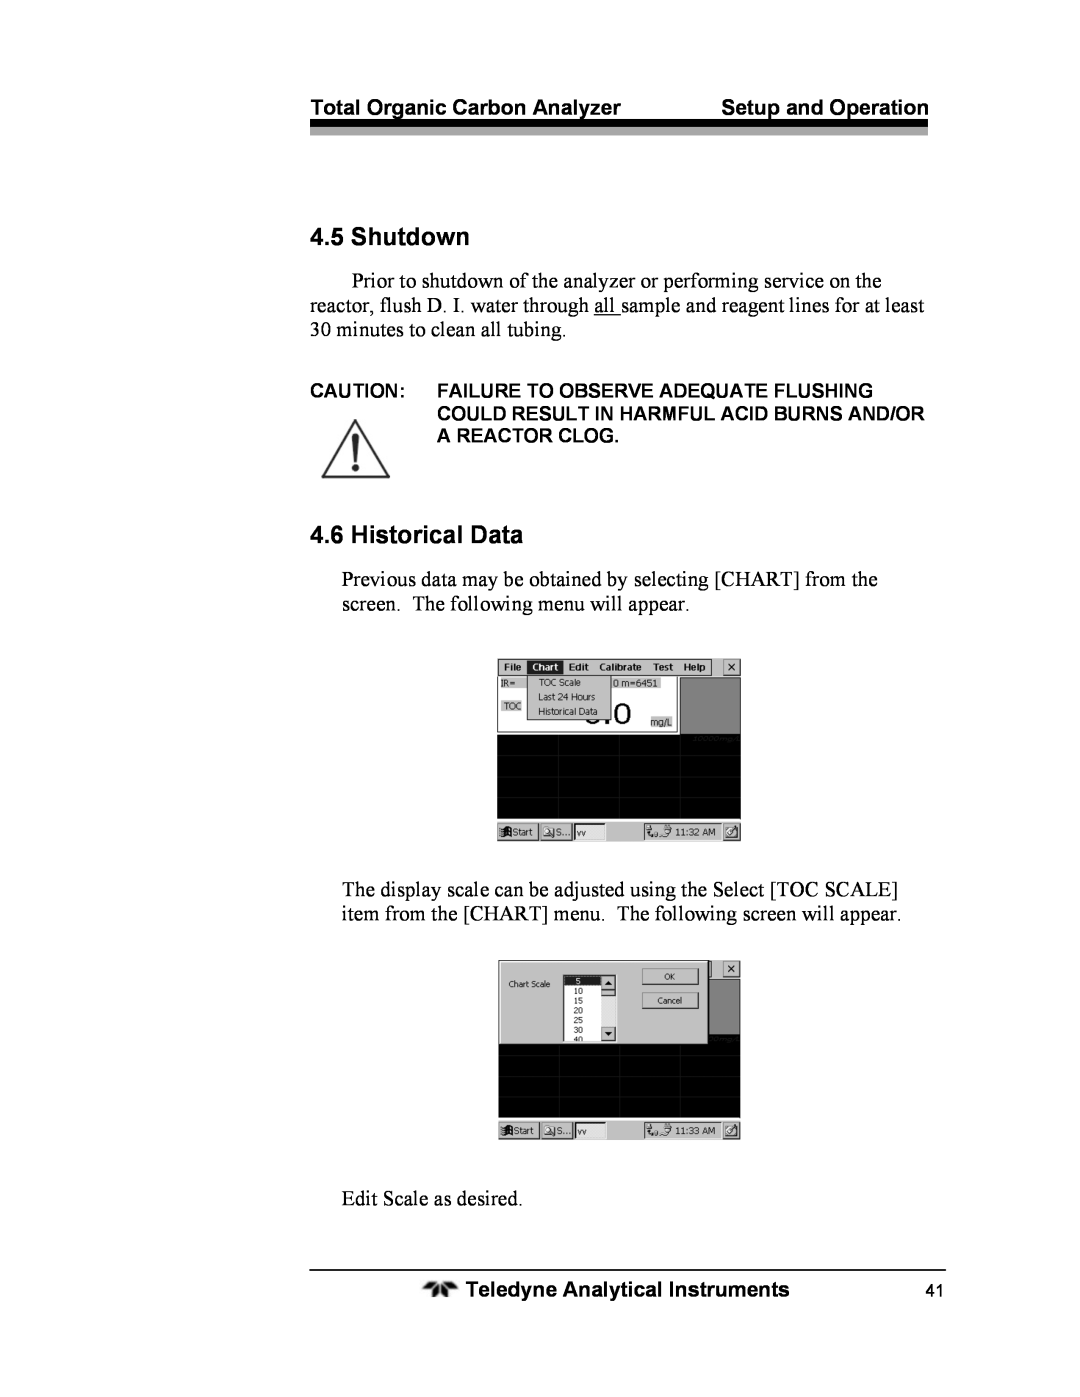 Teledyne 6750 operating instructions Shutdown, Historical Data 